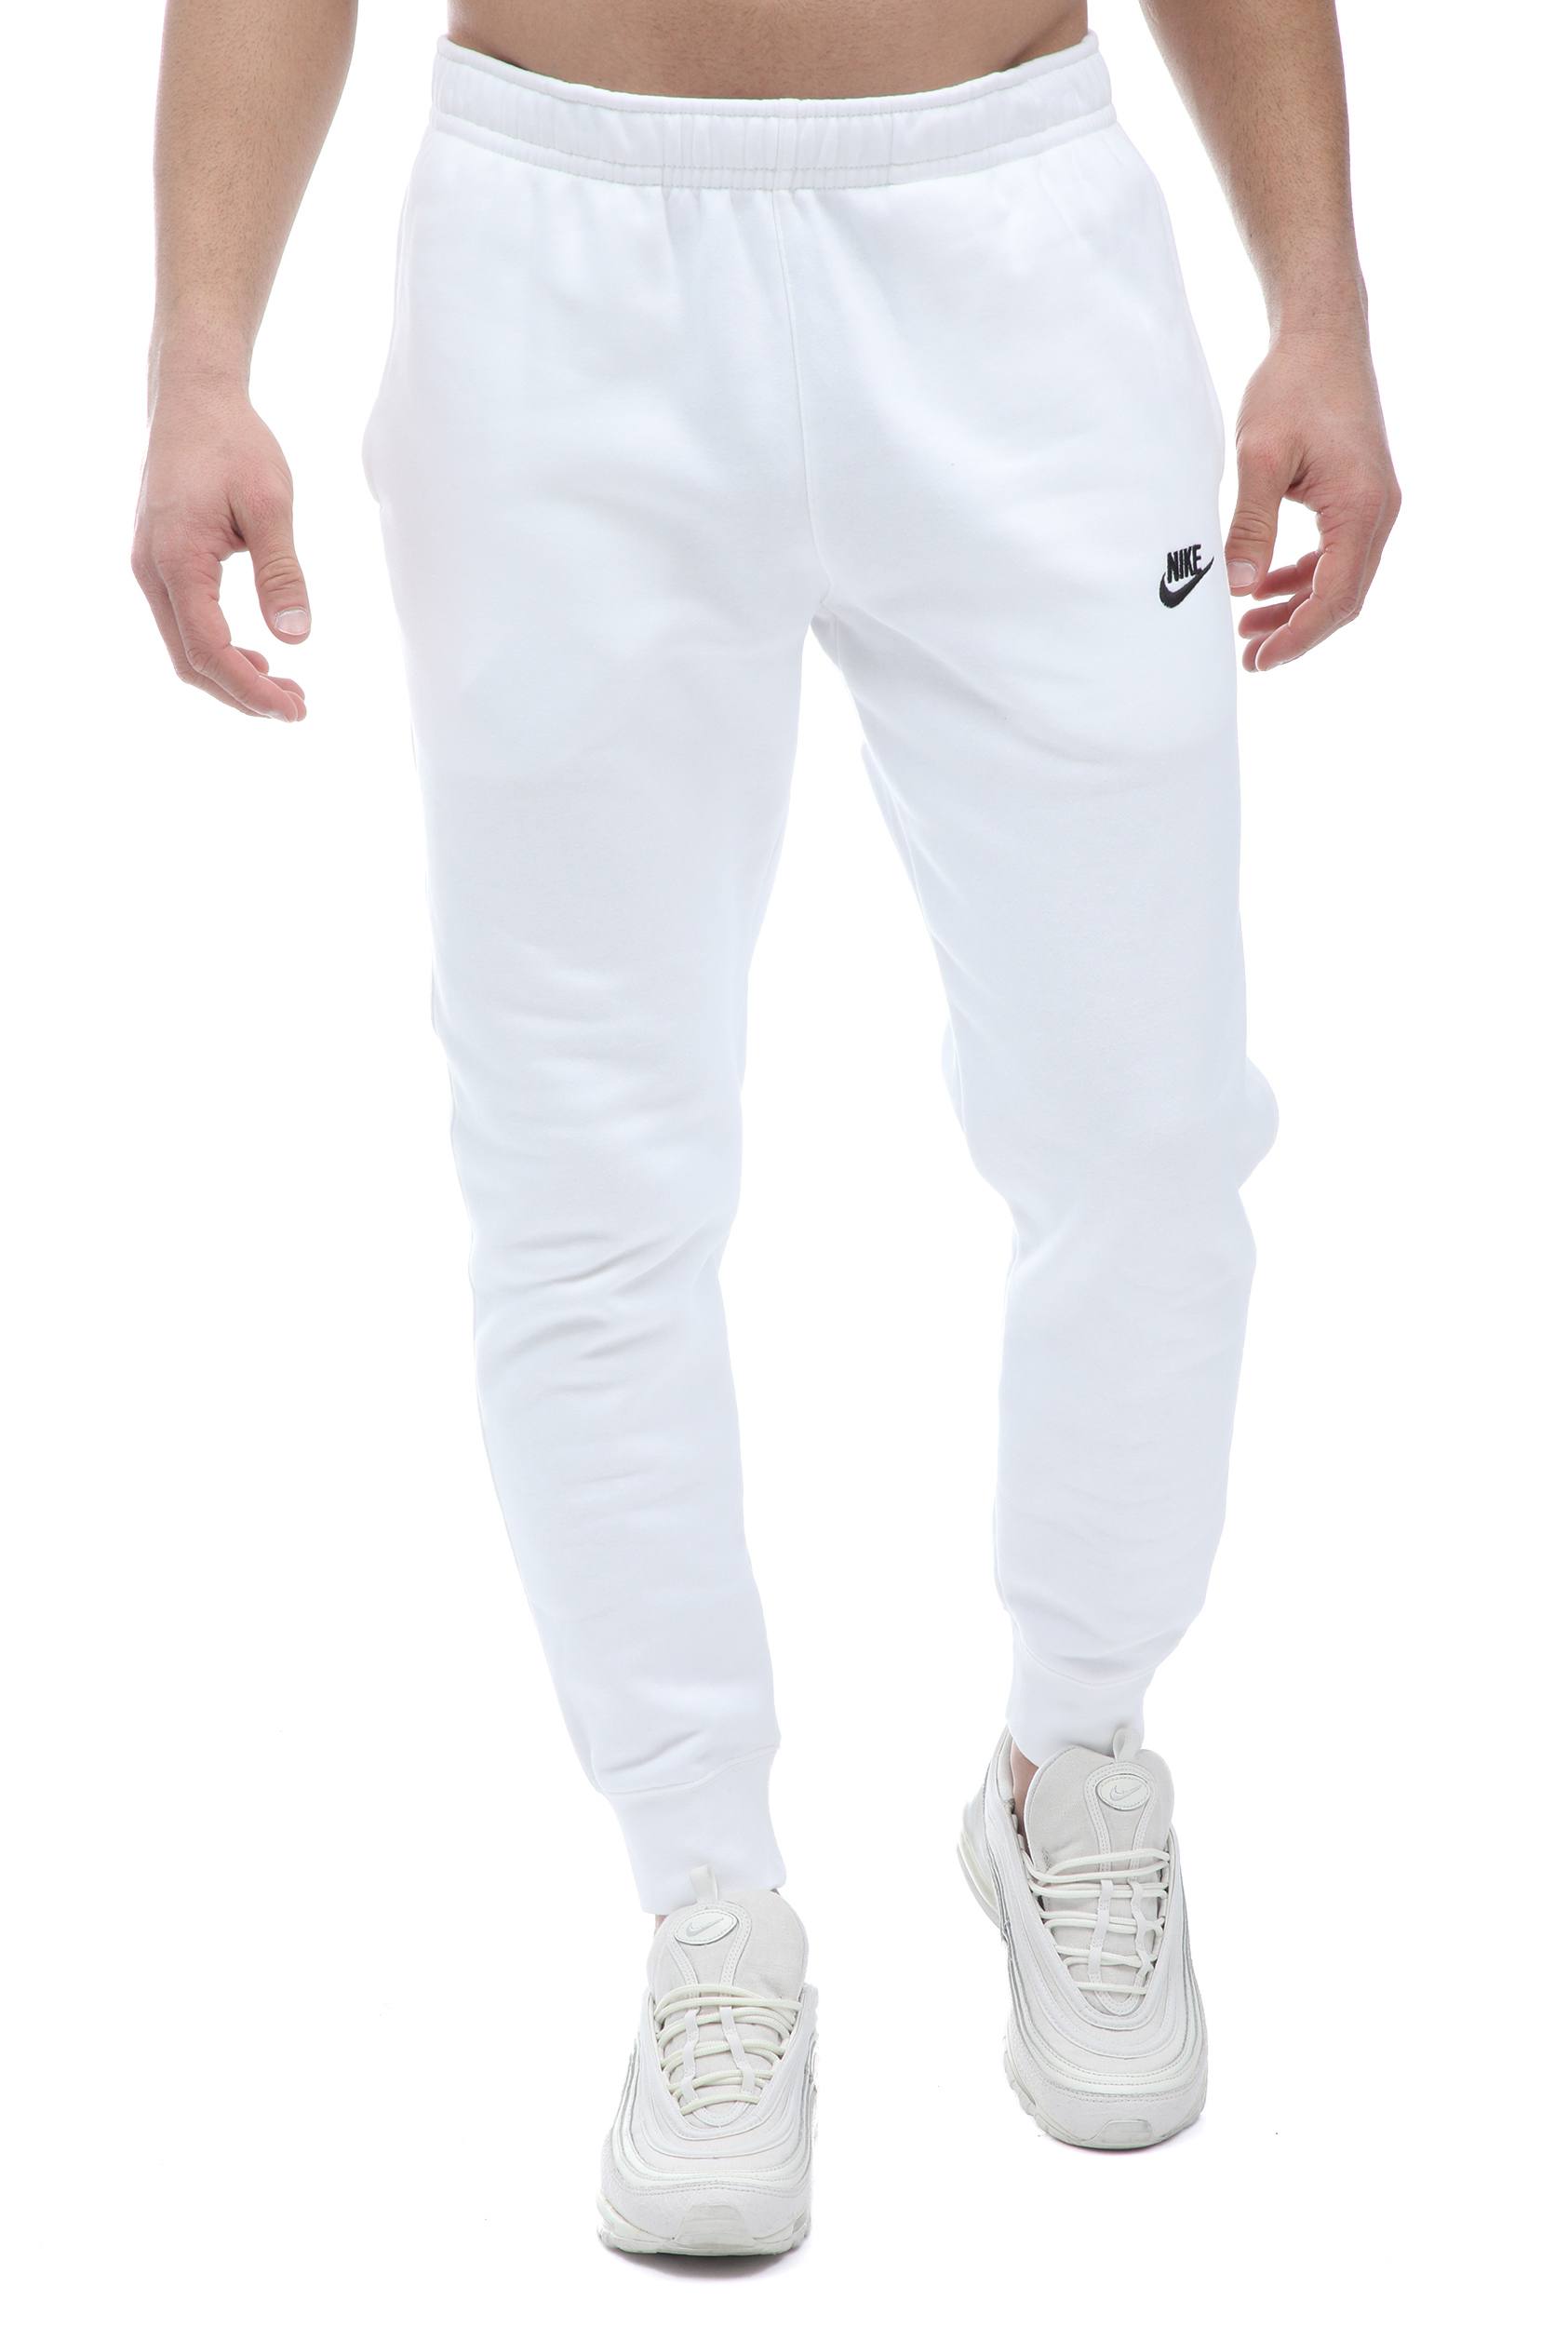 NIKE - Ανδρικό παντελόνι φόρμας NIKE NSW CLUB JGGR BB λευκό